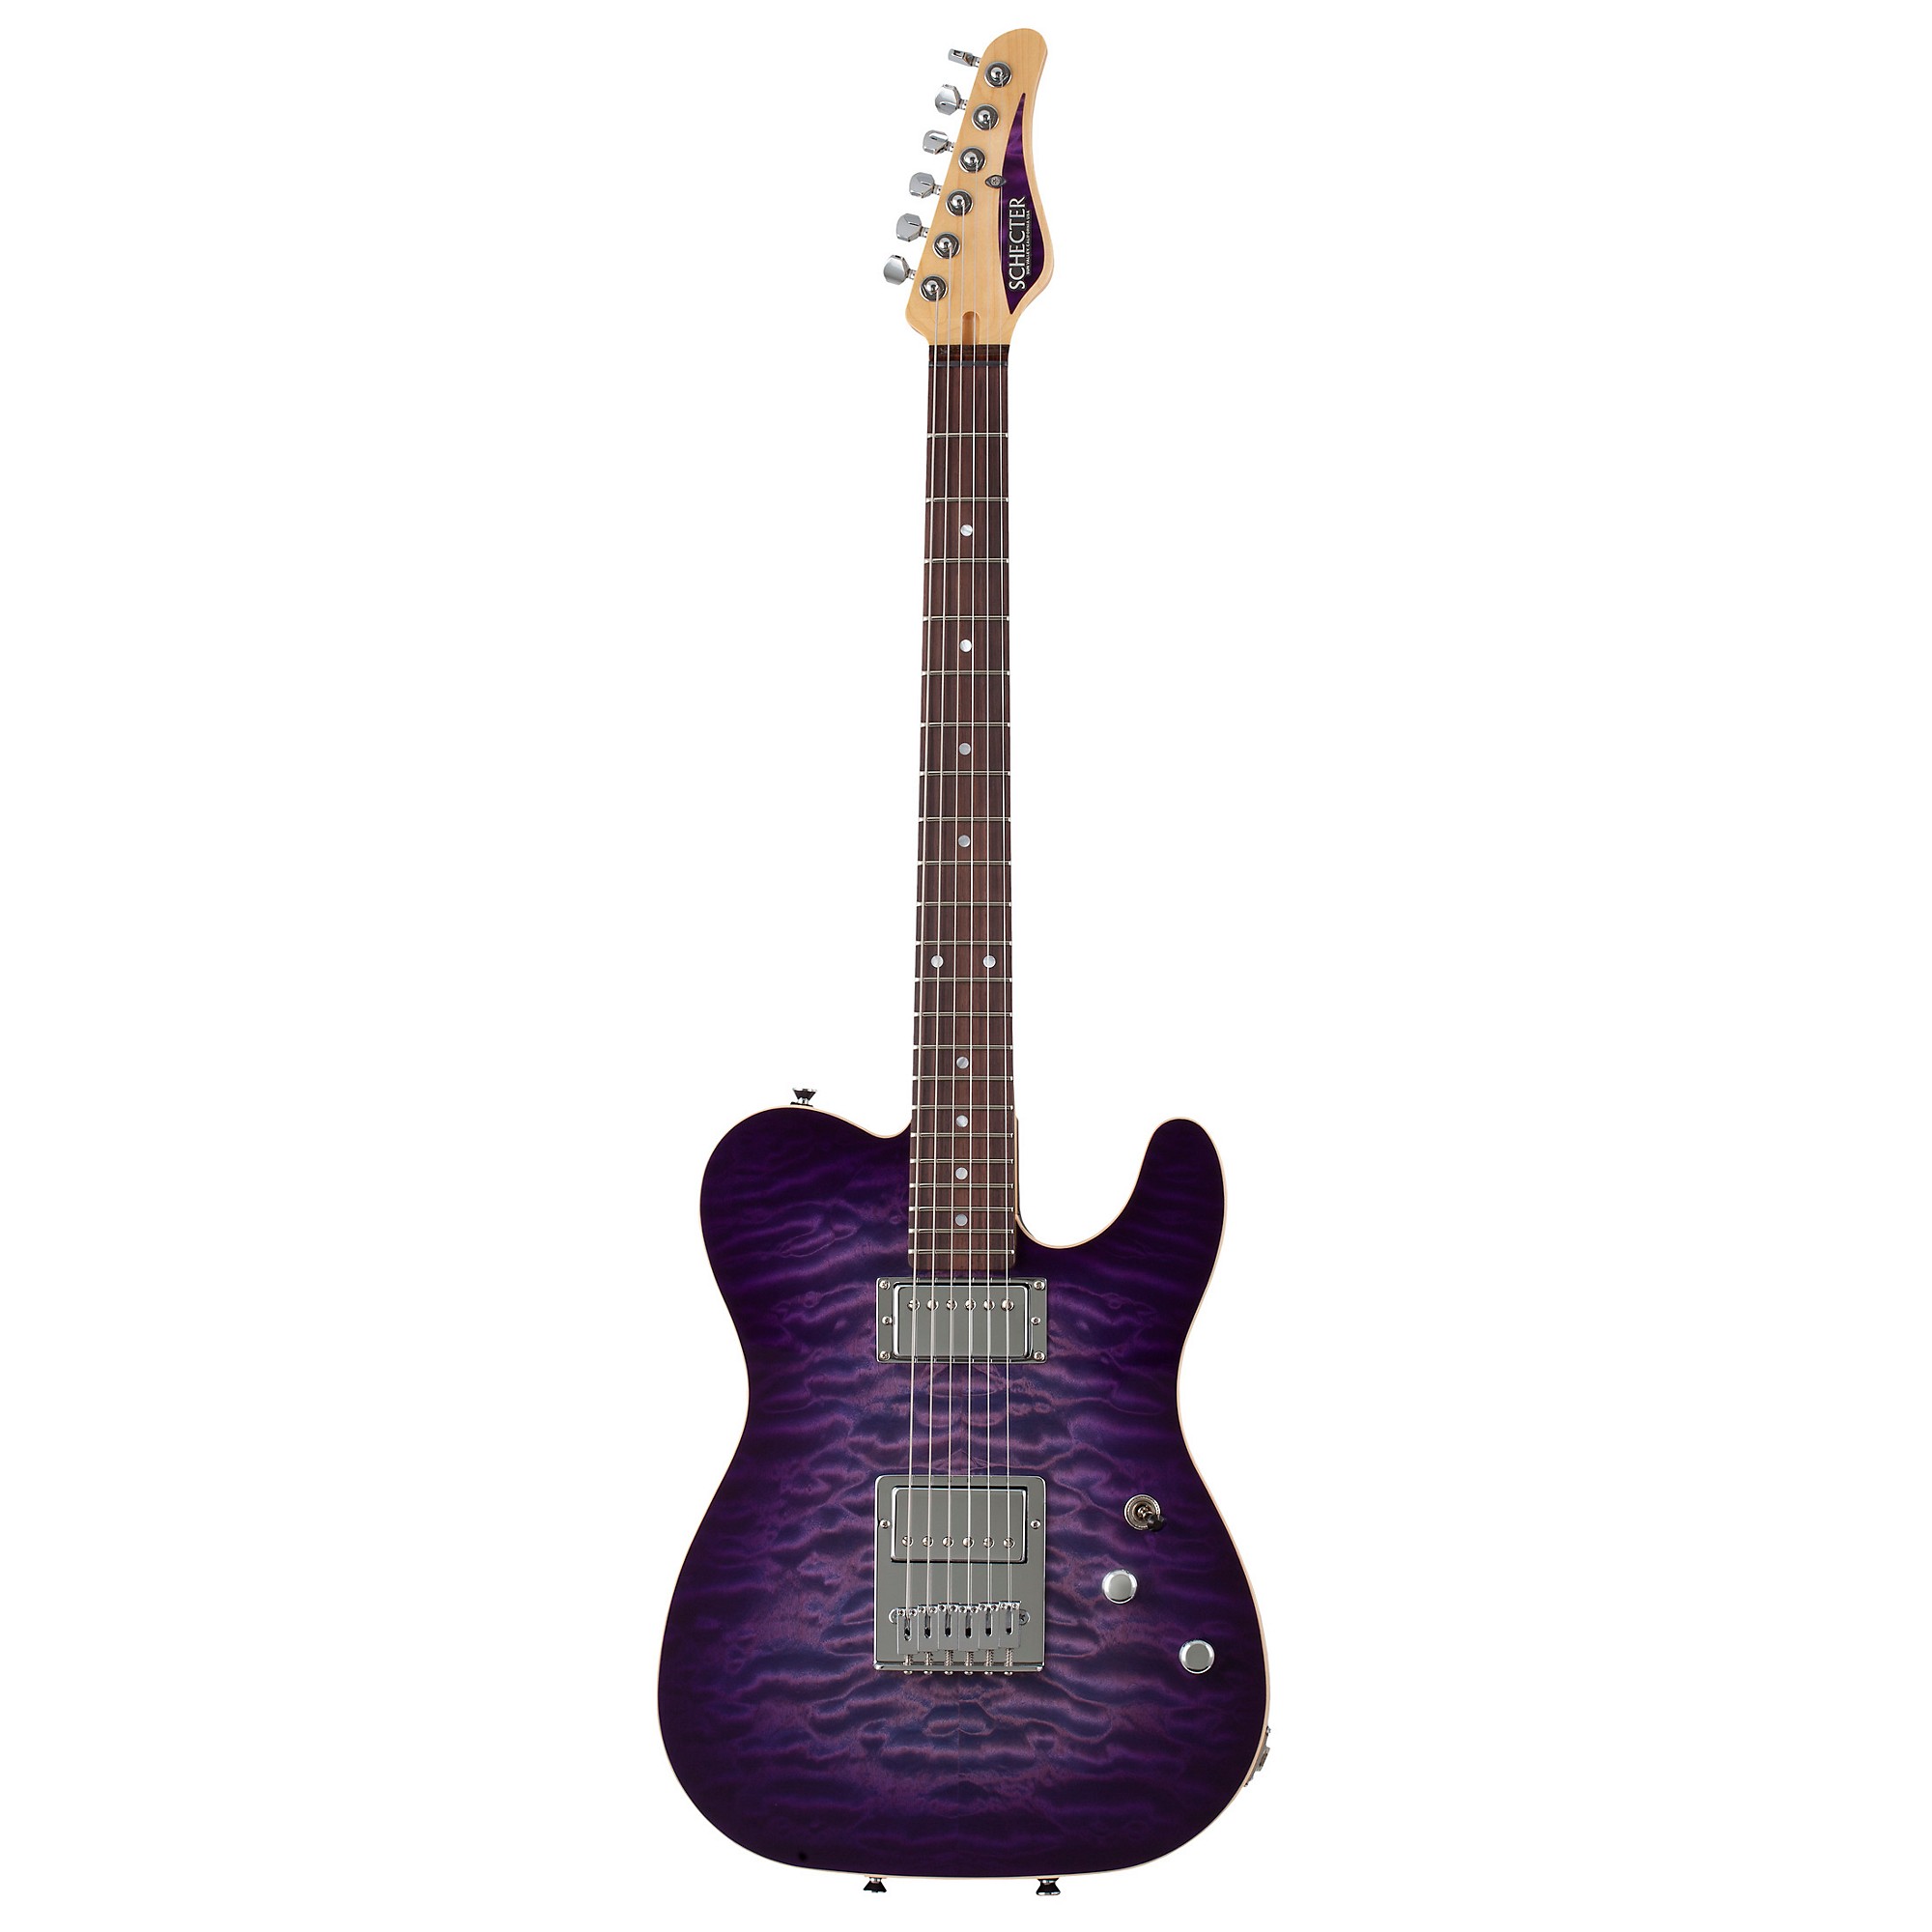 Schecter Guitar Research PT Custom Электрогитара Plum Crazy Purple гибискус plum crazy